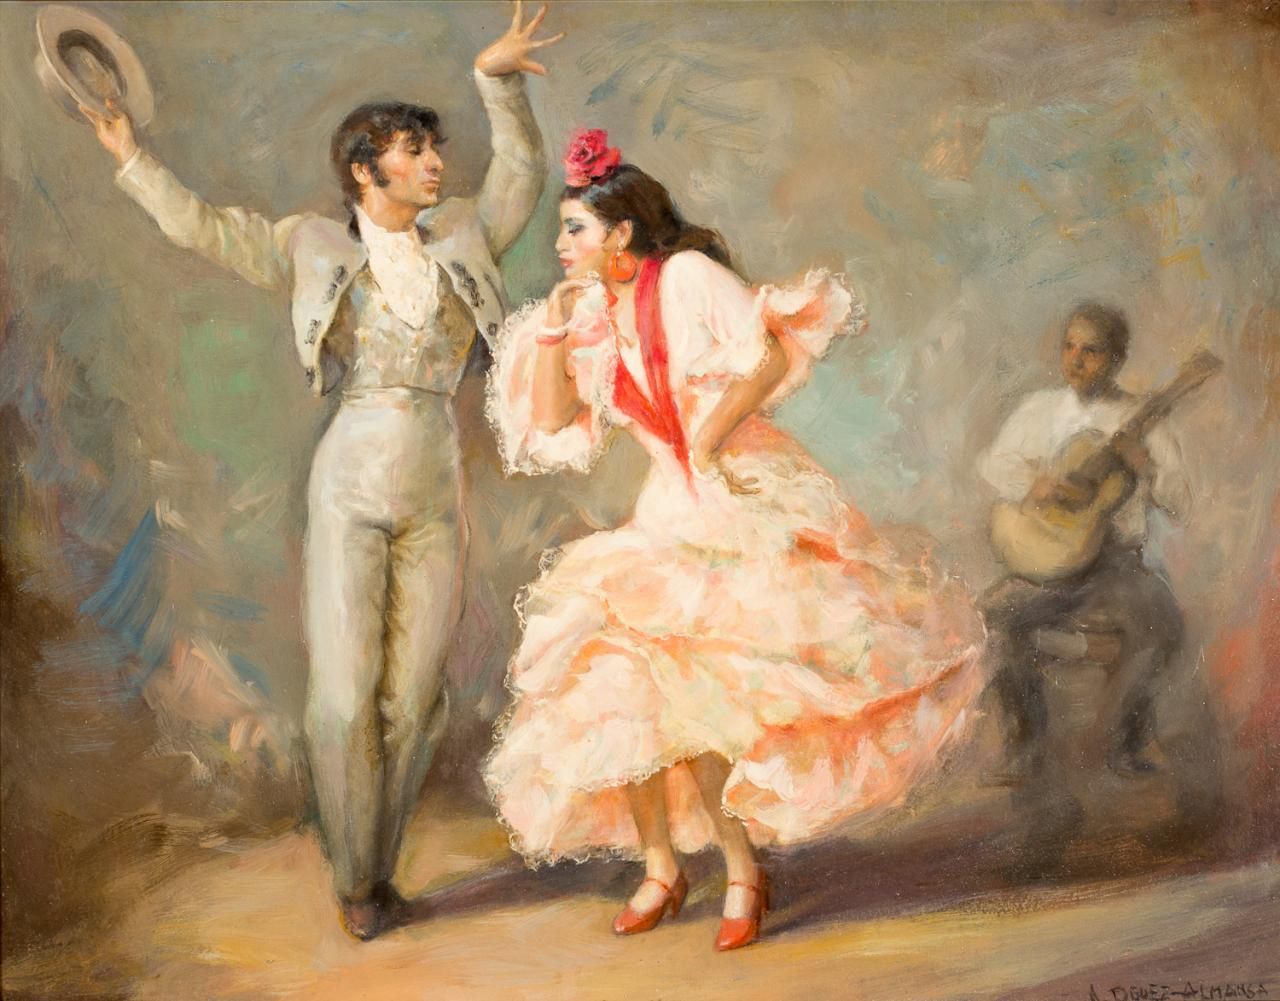 ANTONIO RODRÍGUEZ-ALMANSA Dancers
Oil on board
26 x 34 cm
Signed in the lower ri&hellip;